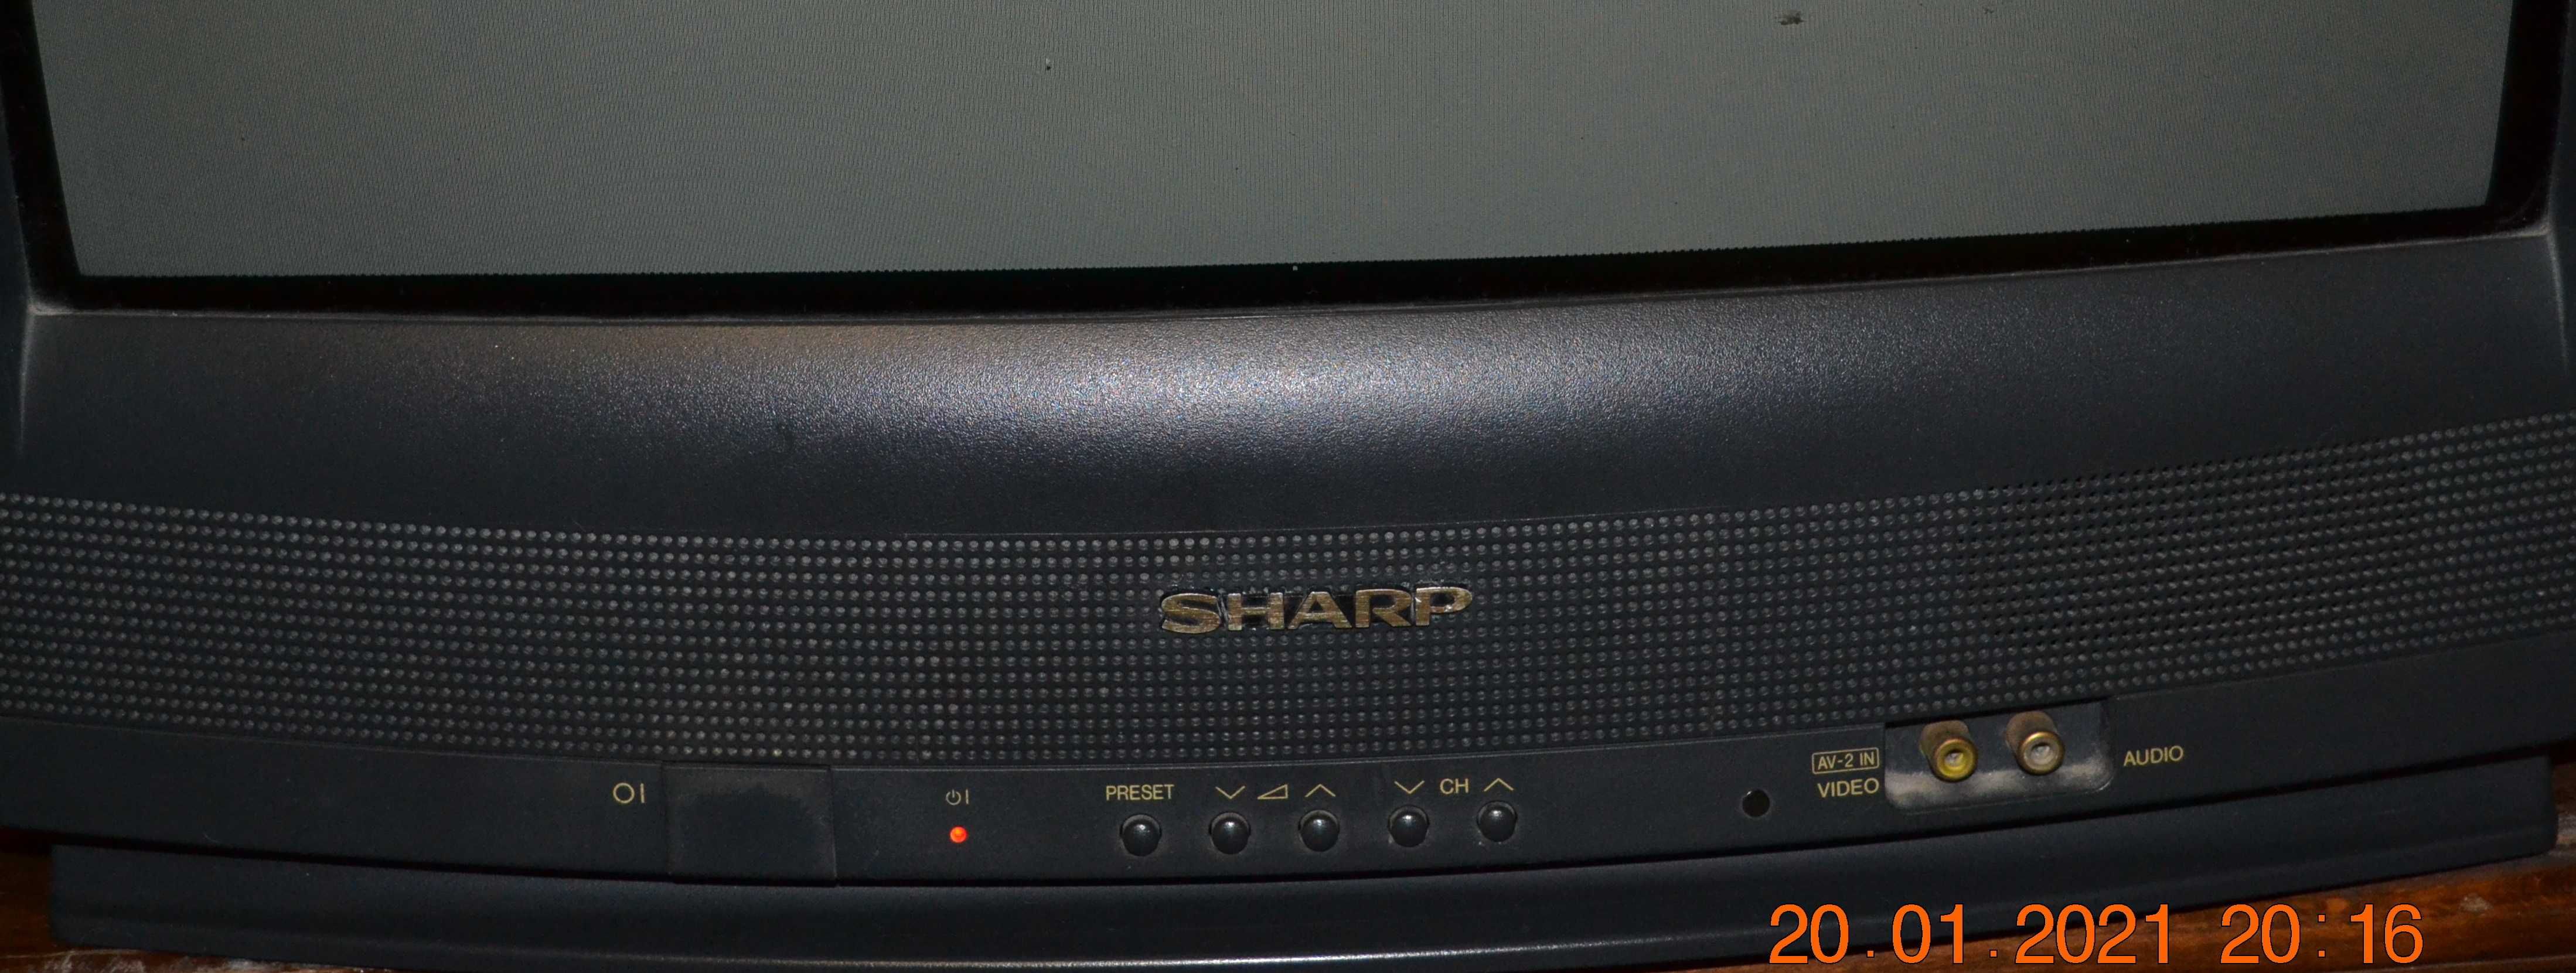 Телевизор "Sharp"